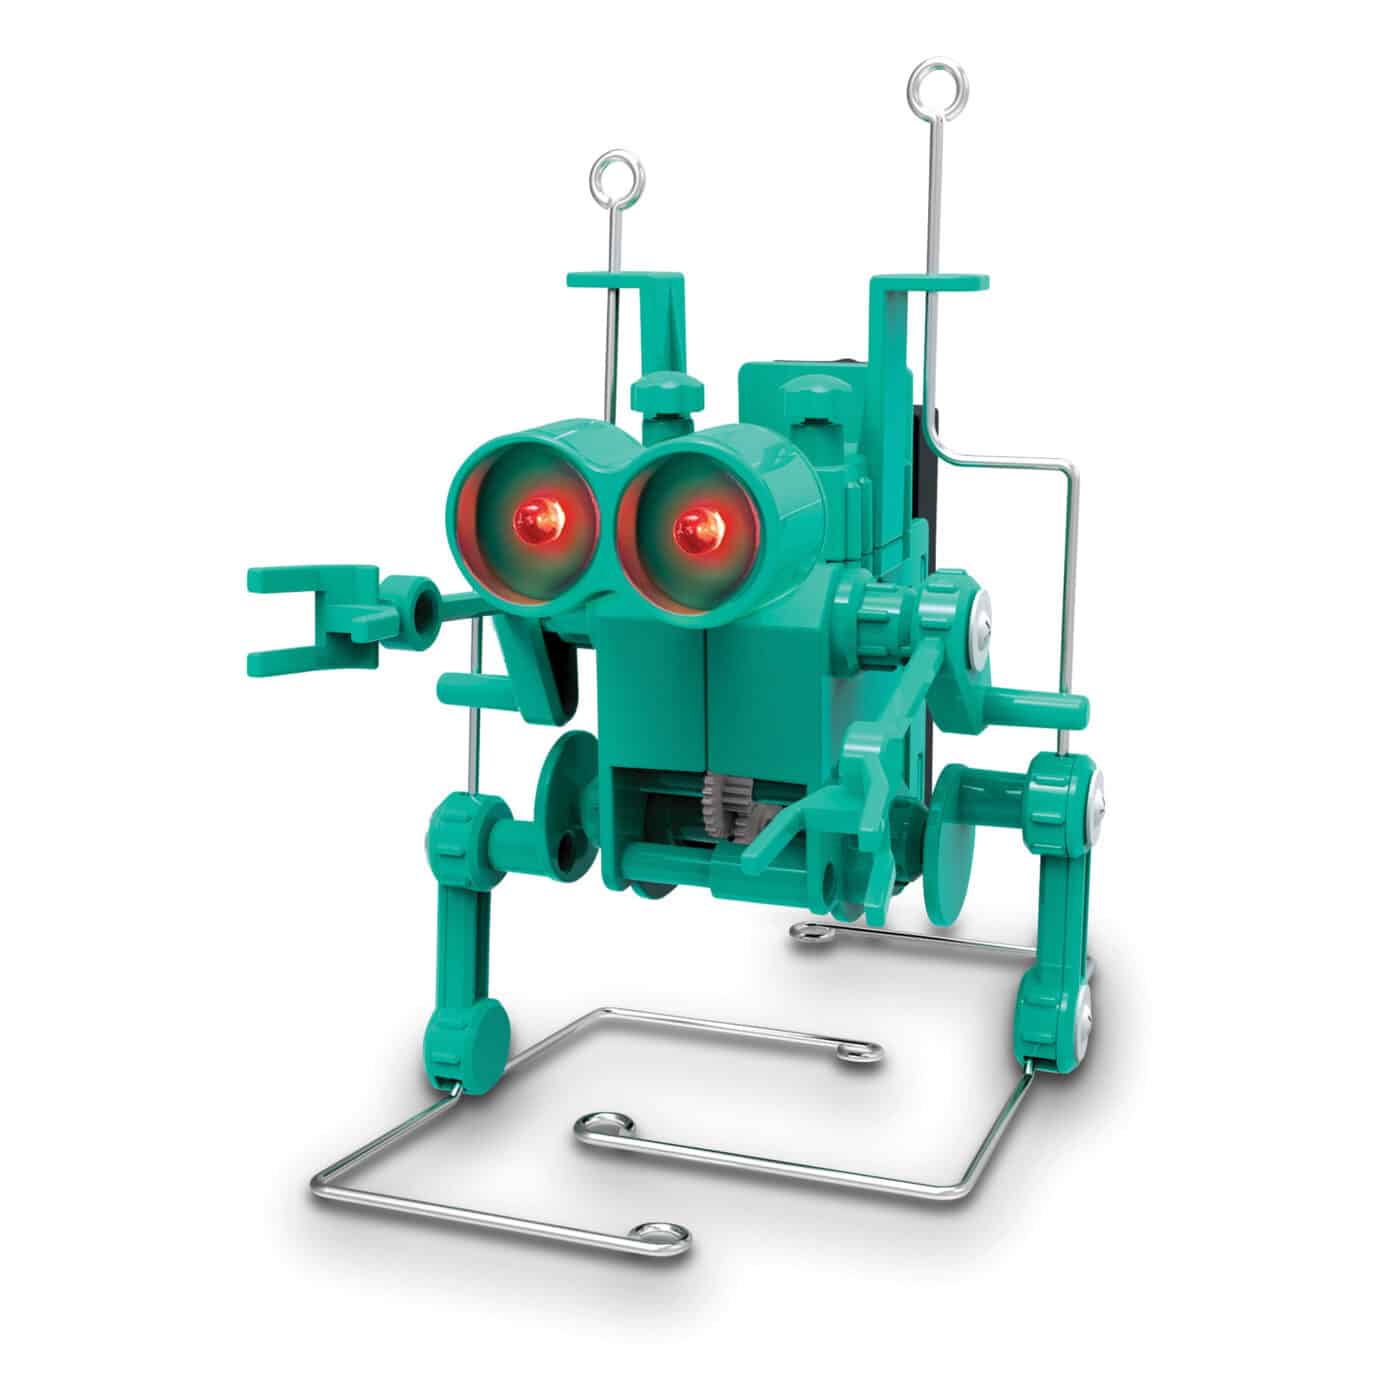 4M - KidzRobotix - Wacky Robot1